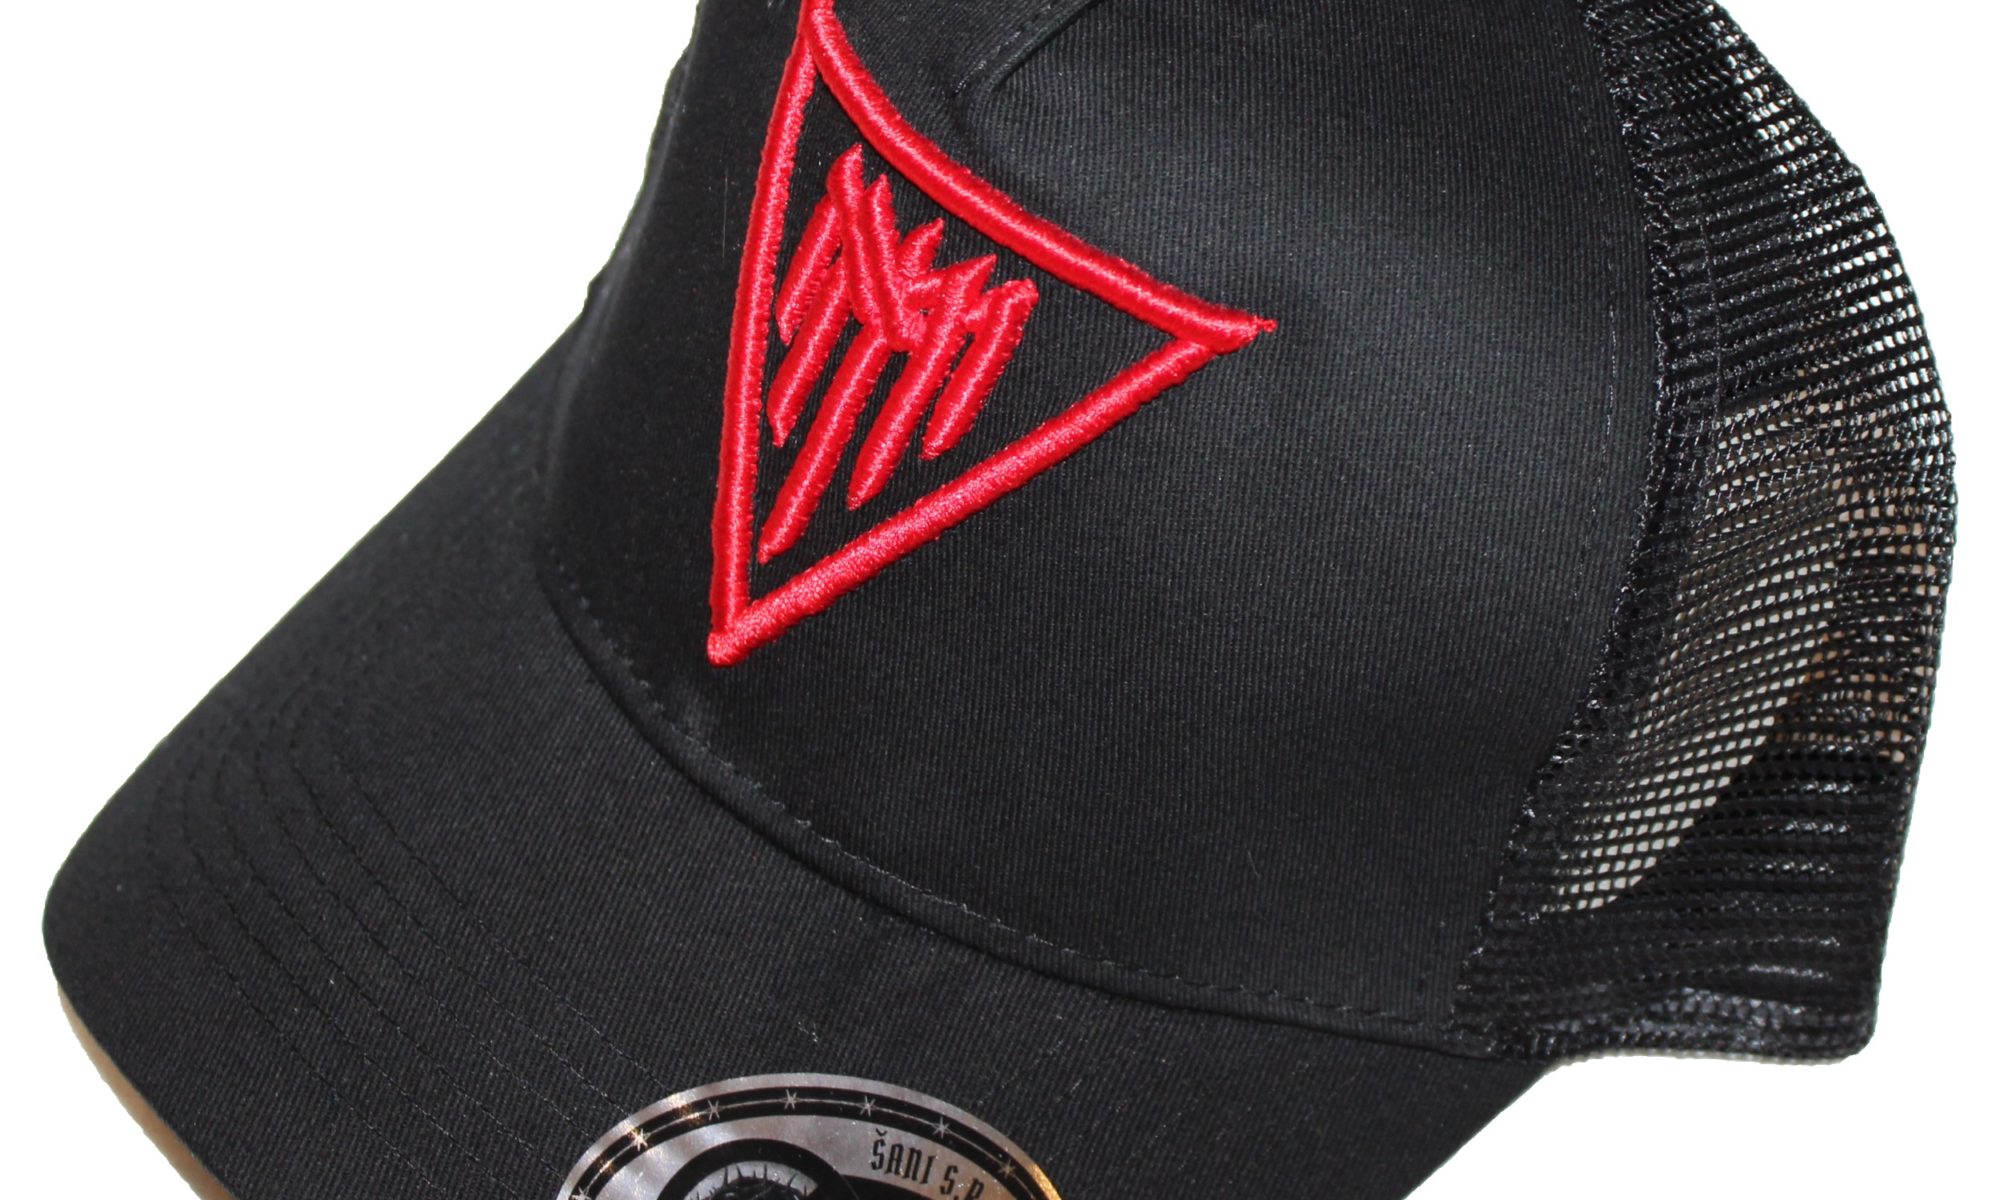 Čepice truckerka, černá s 3D výšivkou, logo Mean Messiah